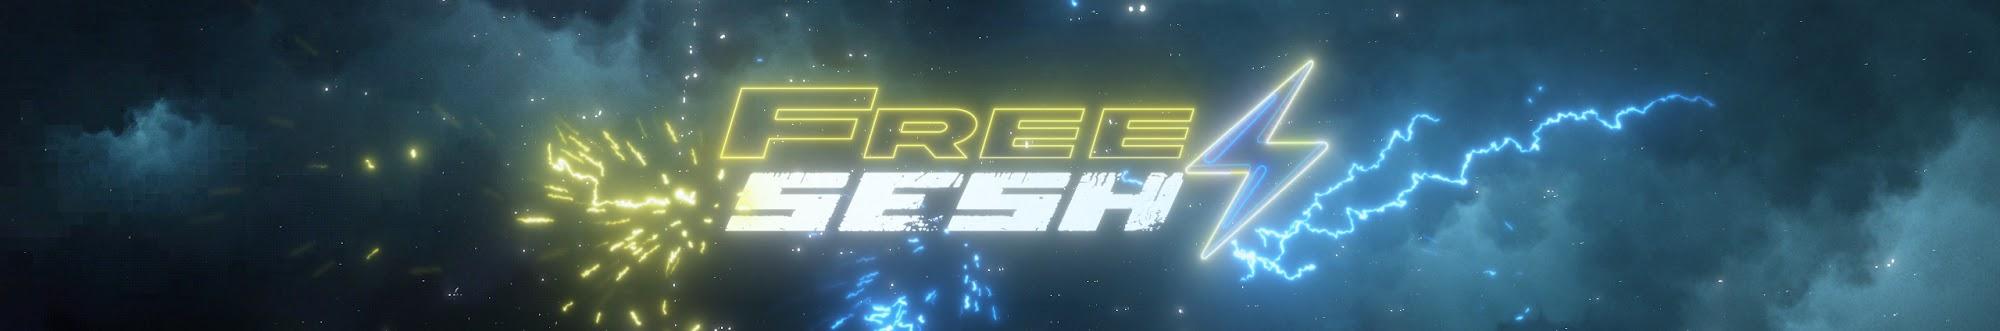 FreeSesh